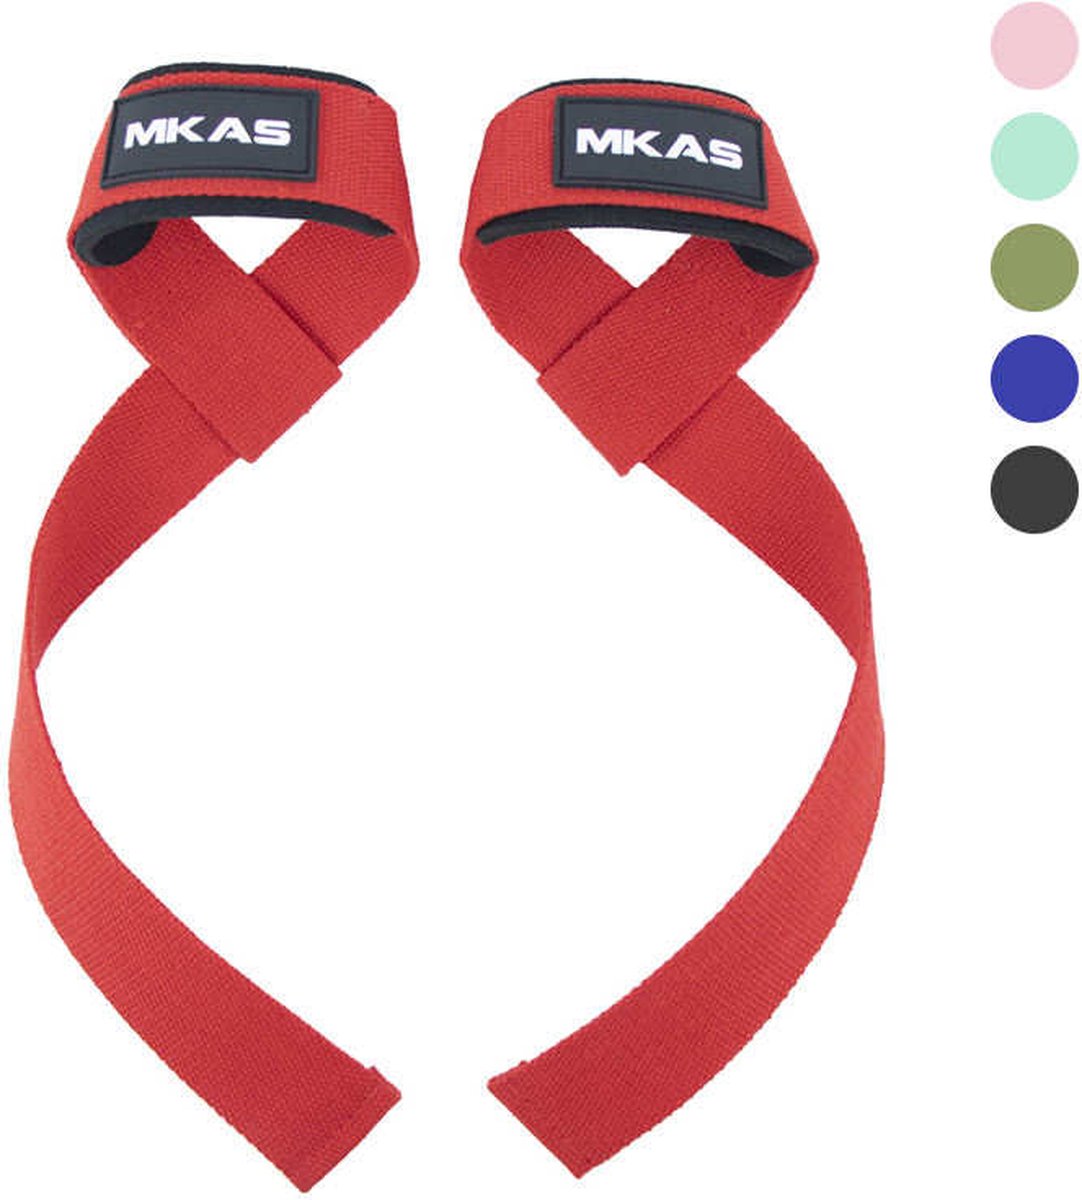 MKAS - Lifting straps 2 Pack- Rood & Zwart- 2 Stuks-Lifting grip hooks- Gym straps- Dead lift straps -Fitness-Cross-fit en krachtraining